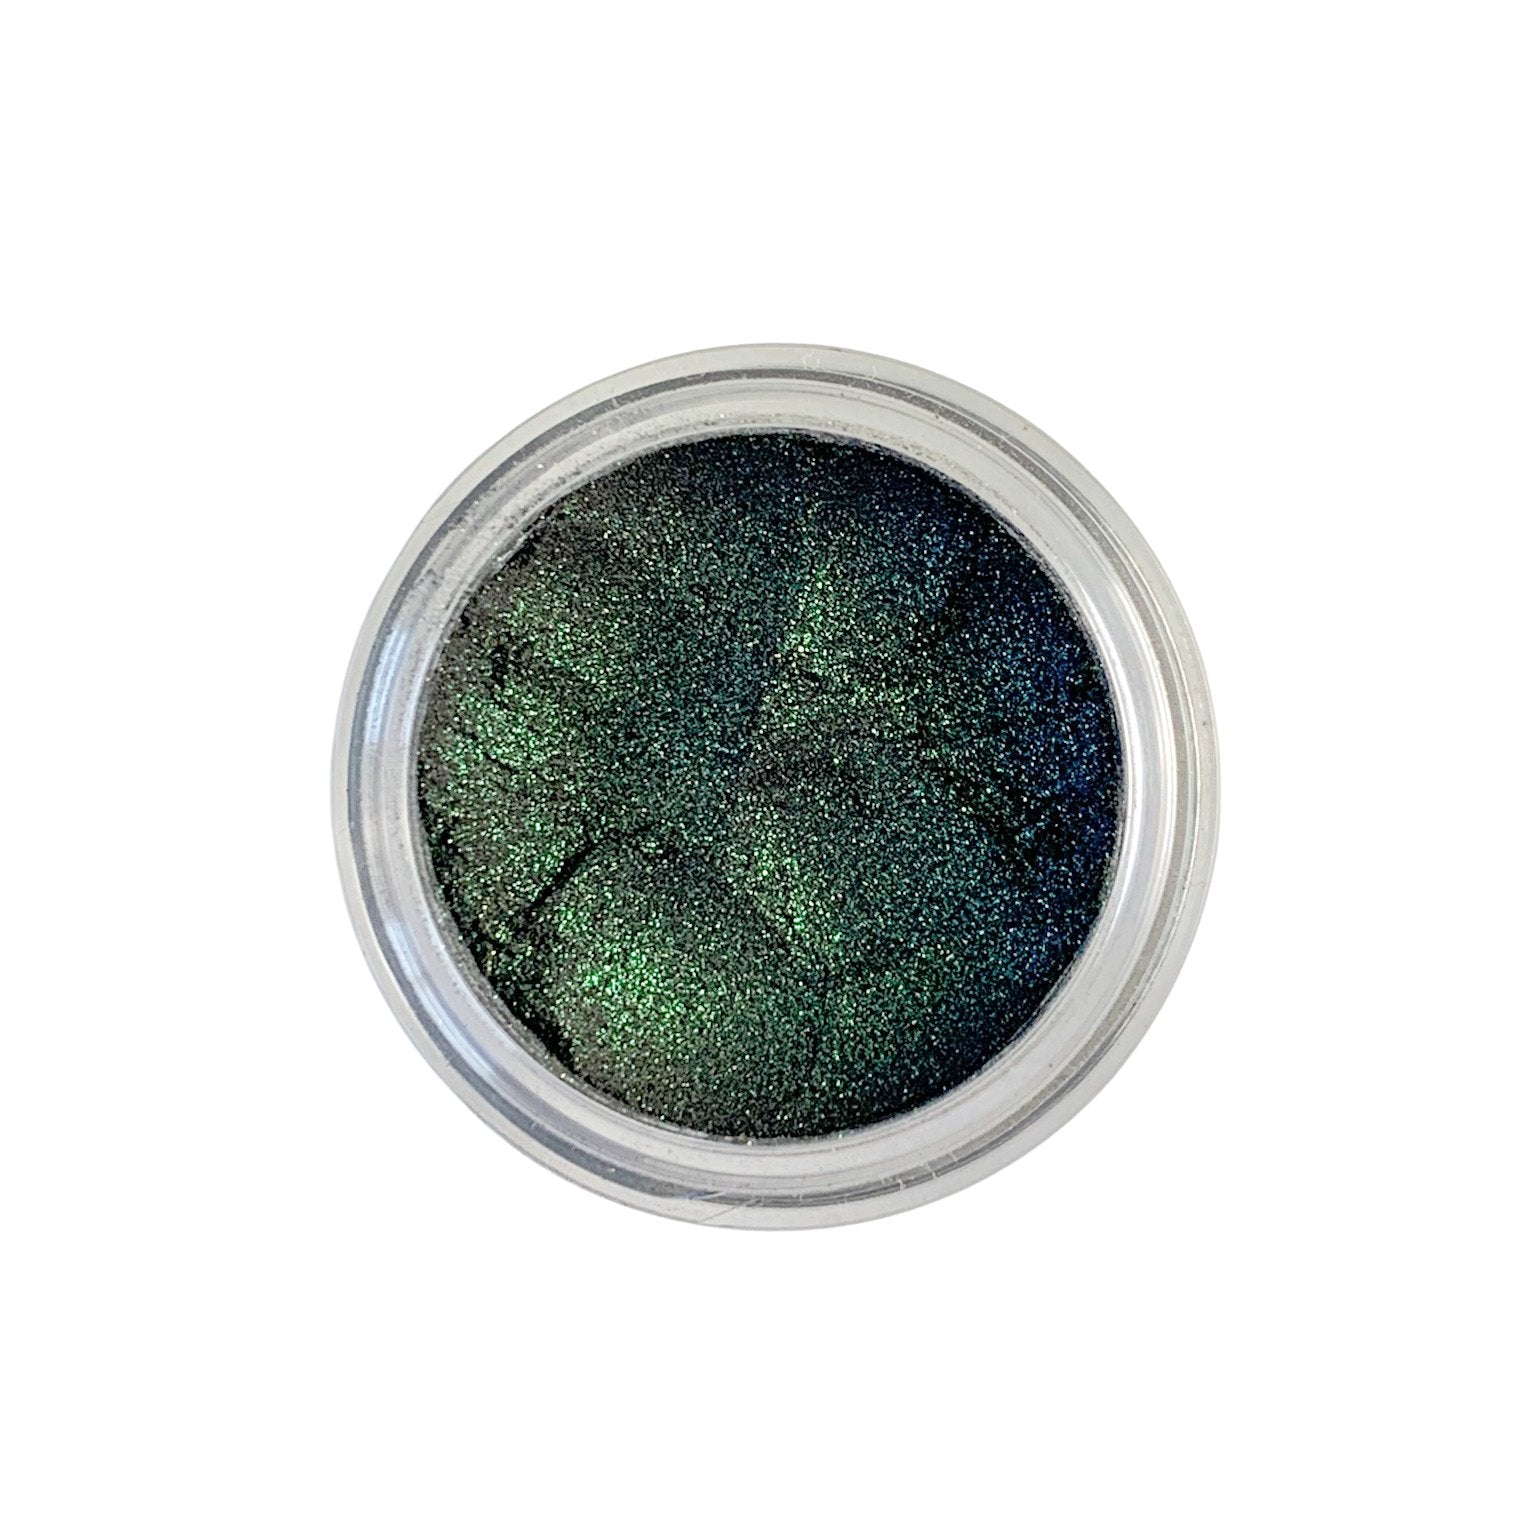 astral eyeshadow - green glitter on a base of dark eyeshadow. vegan and cruelty free. 2 grams.